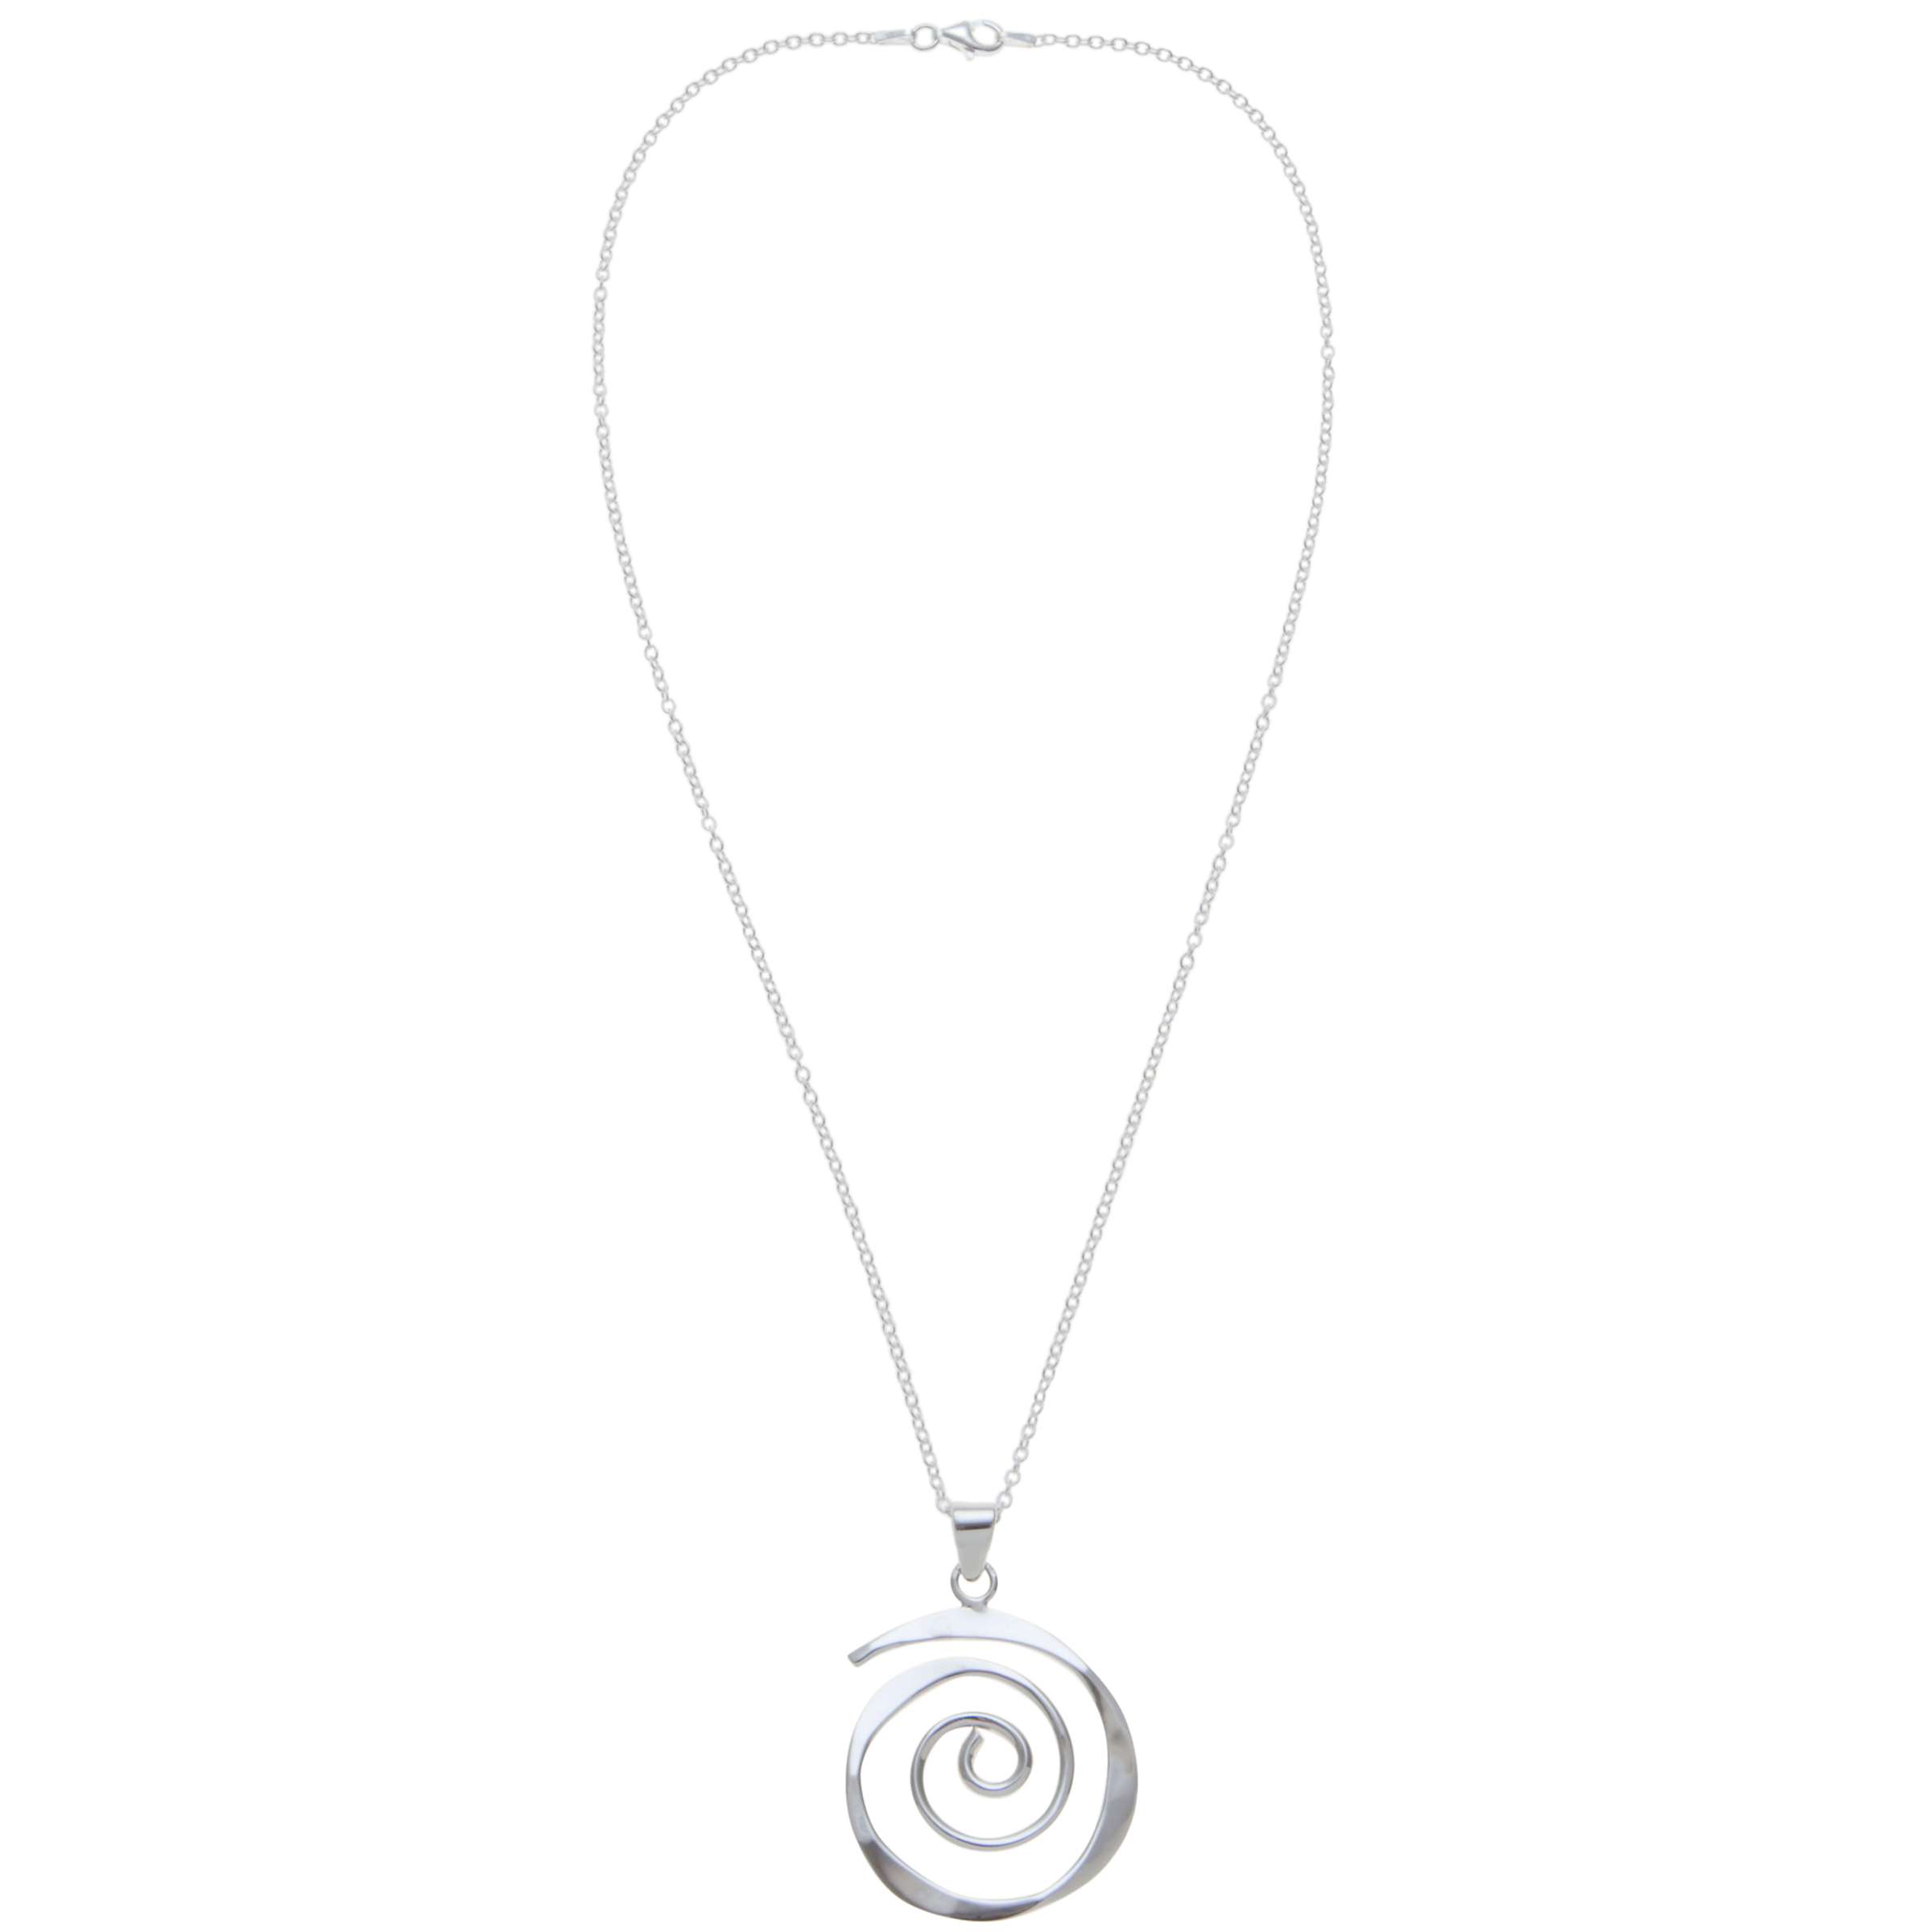 Buy Andea Sterling Silver Sculptured Spiral Pendant Necklace Online at johnlewis.com